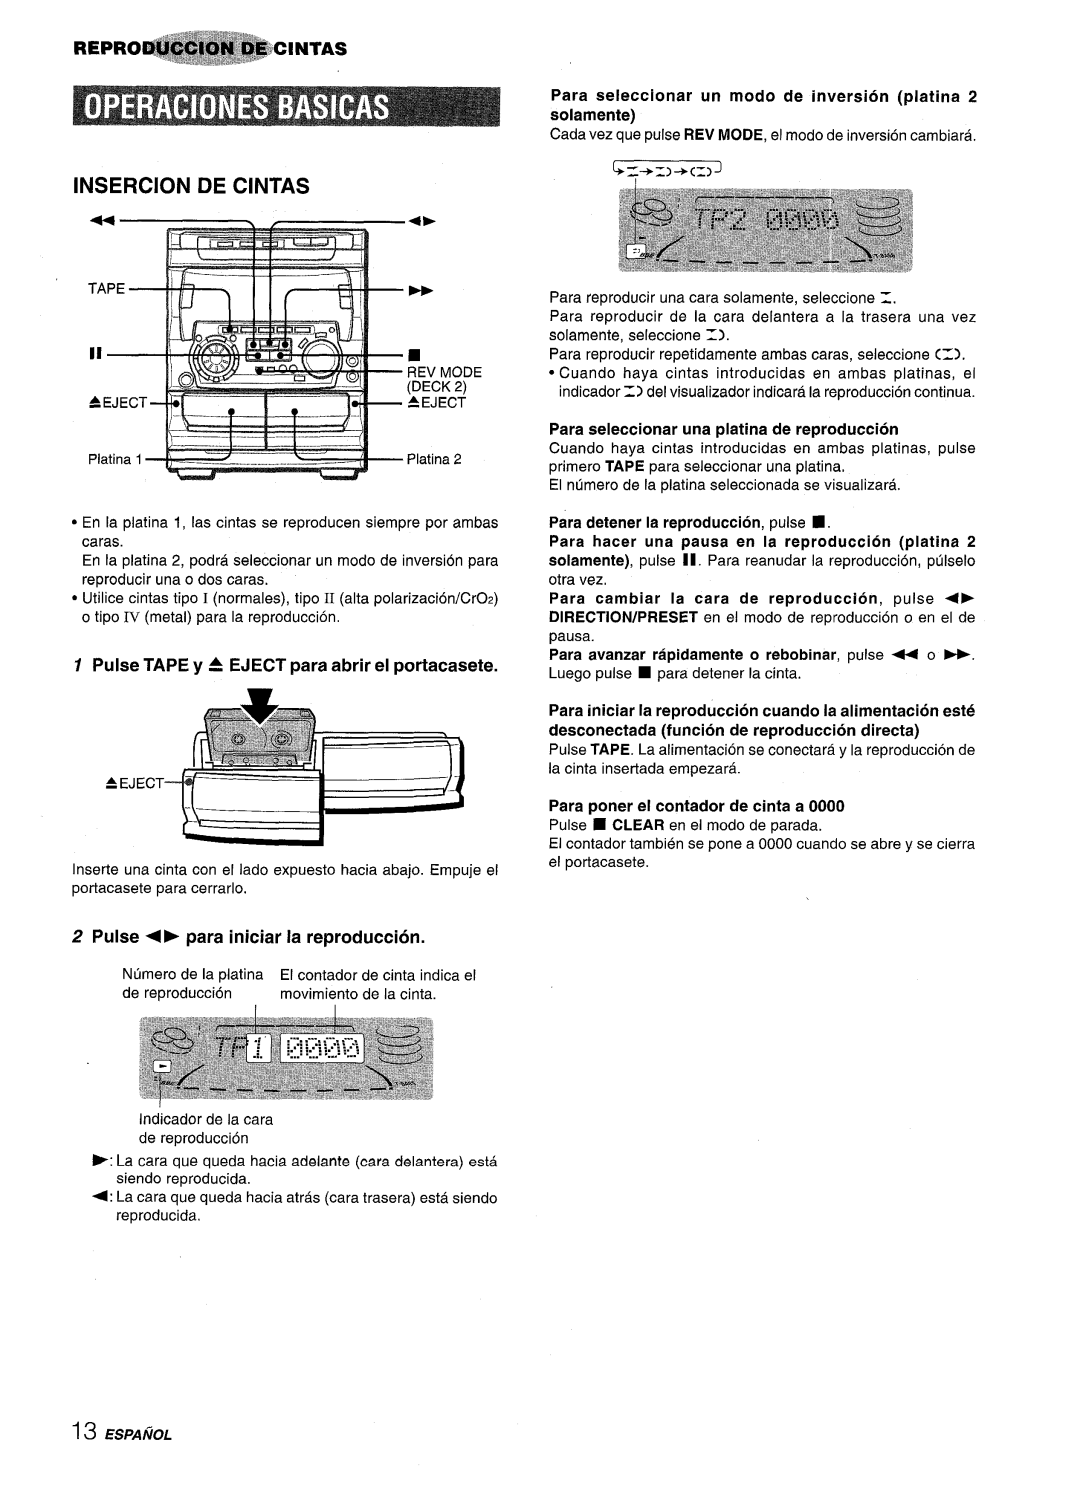 Sony NSX-A707 manual Insercion, De Cintas, Z.,.,, ----- ‘, Para seleccionar un modo de inversion platina 2 solamente, r-ff 